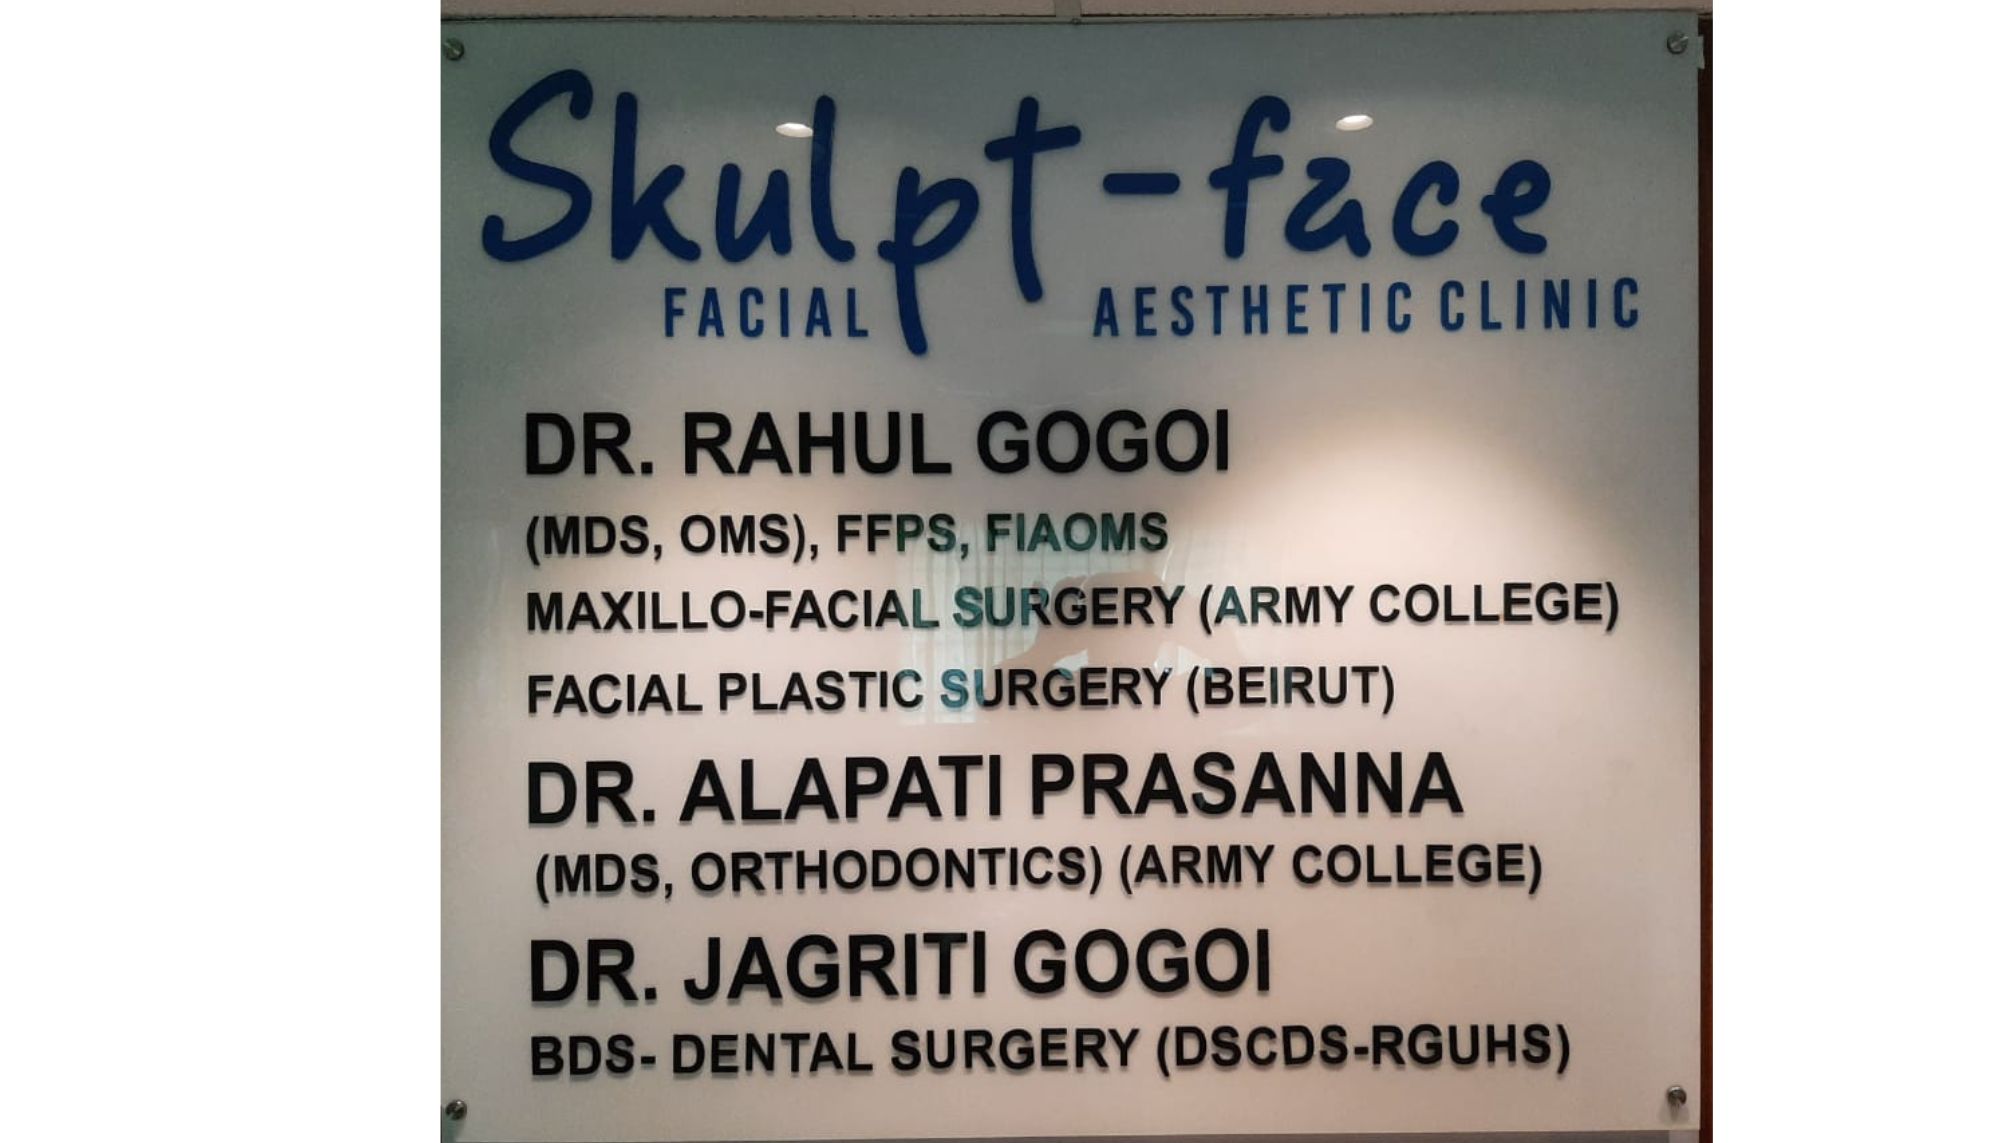 Our Happy Customer @ Skulpt-face Facial Aesthetic Clinic